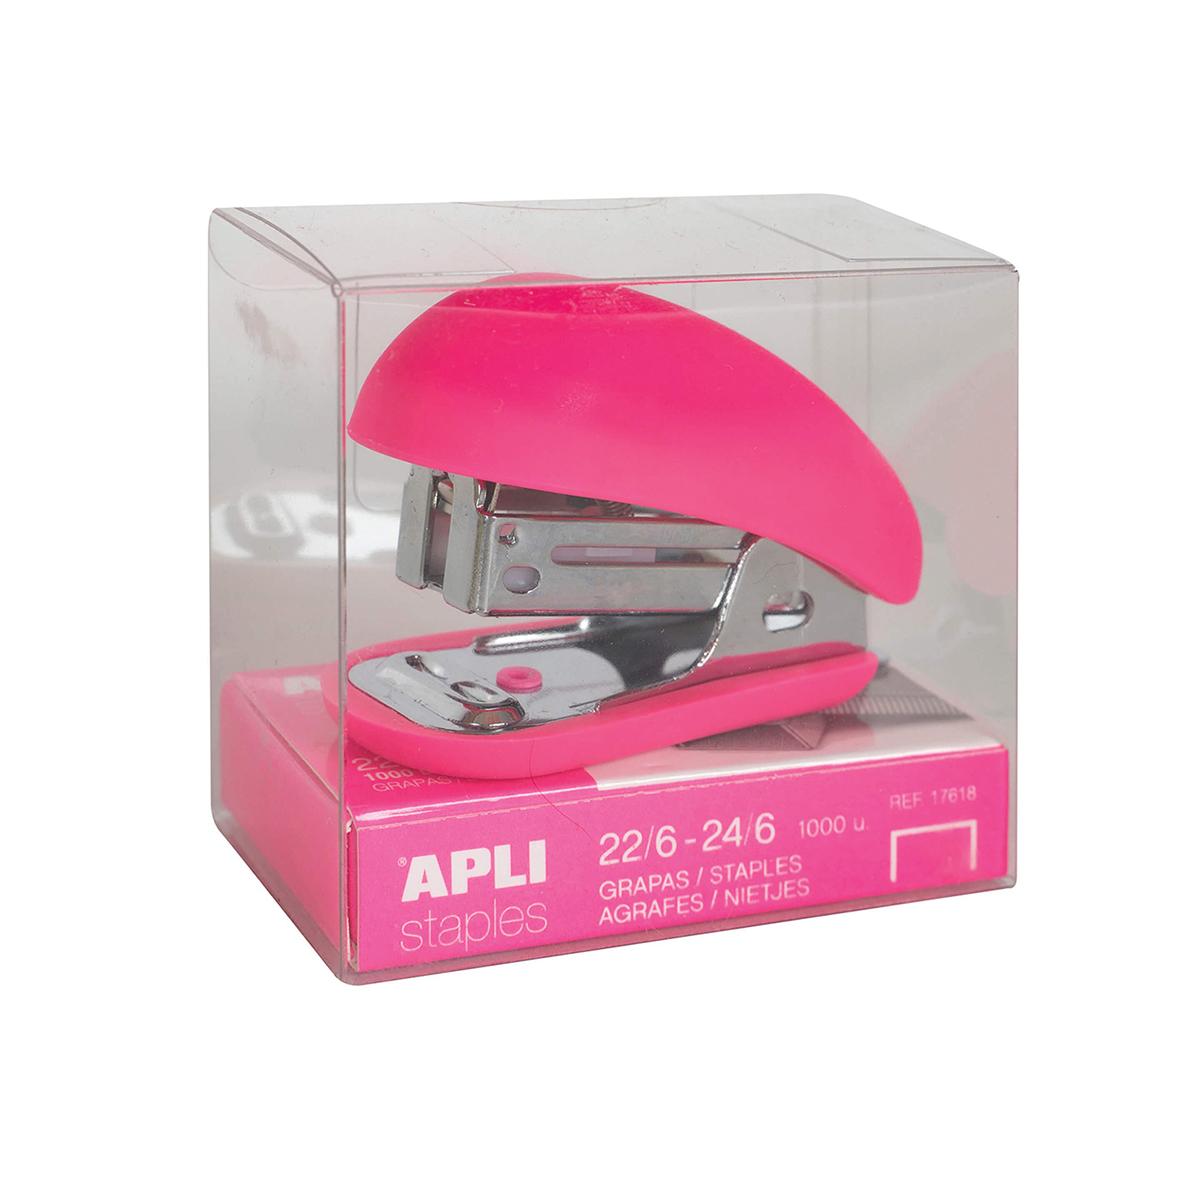 Mini capsator Apli Fluor Collection, 24/6, 63 cm, roz